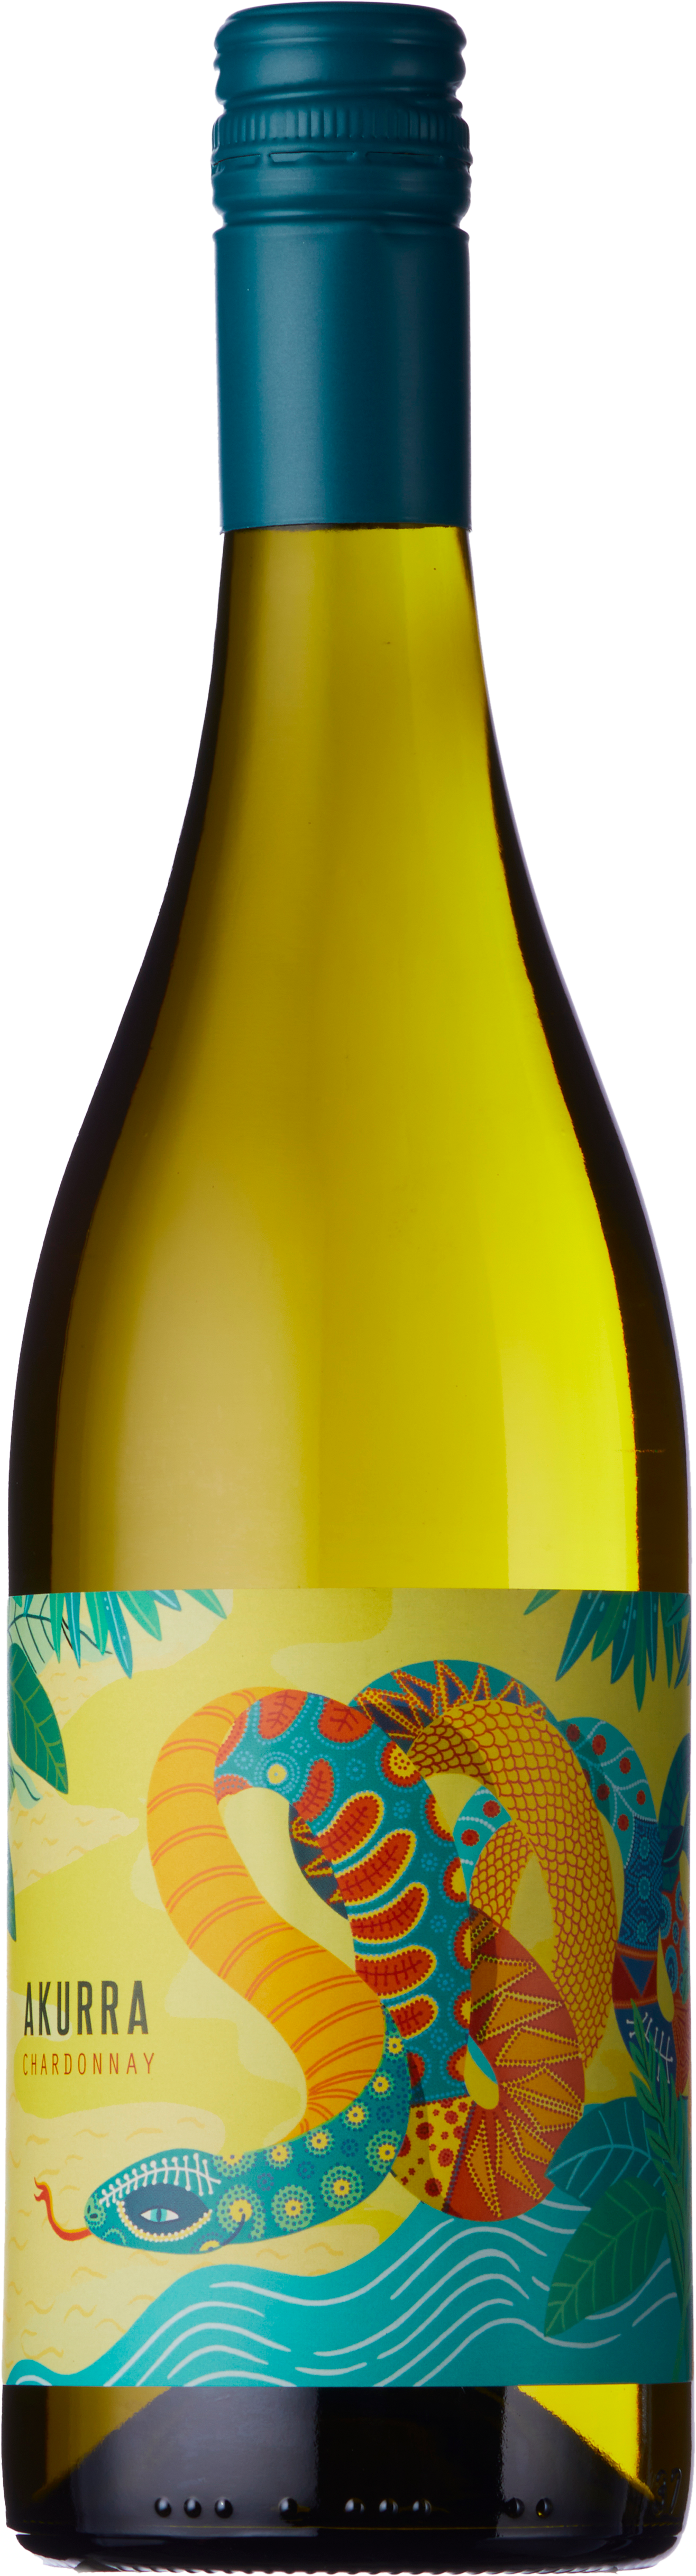 Pre Order a Case of Akurra Chardonnay Australia 75cl Saving 10%